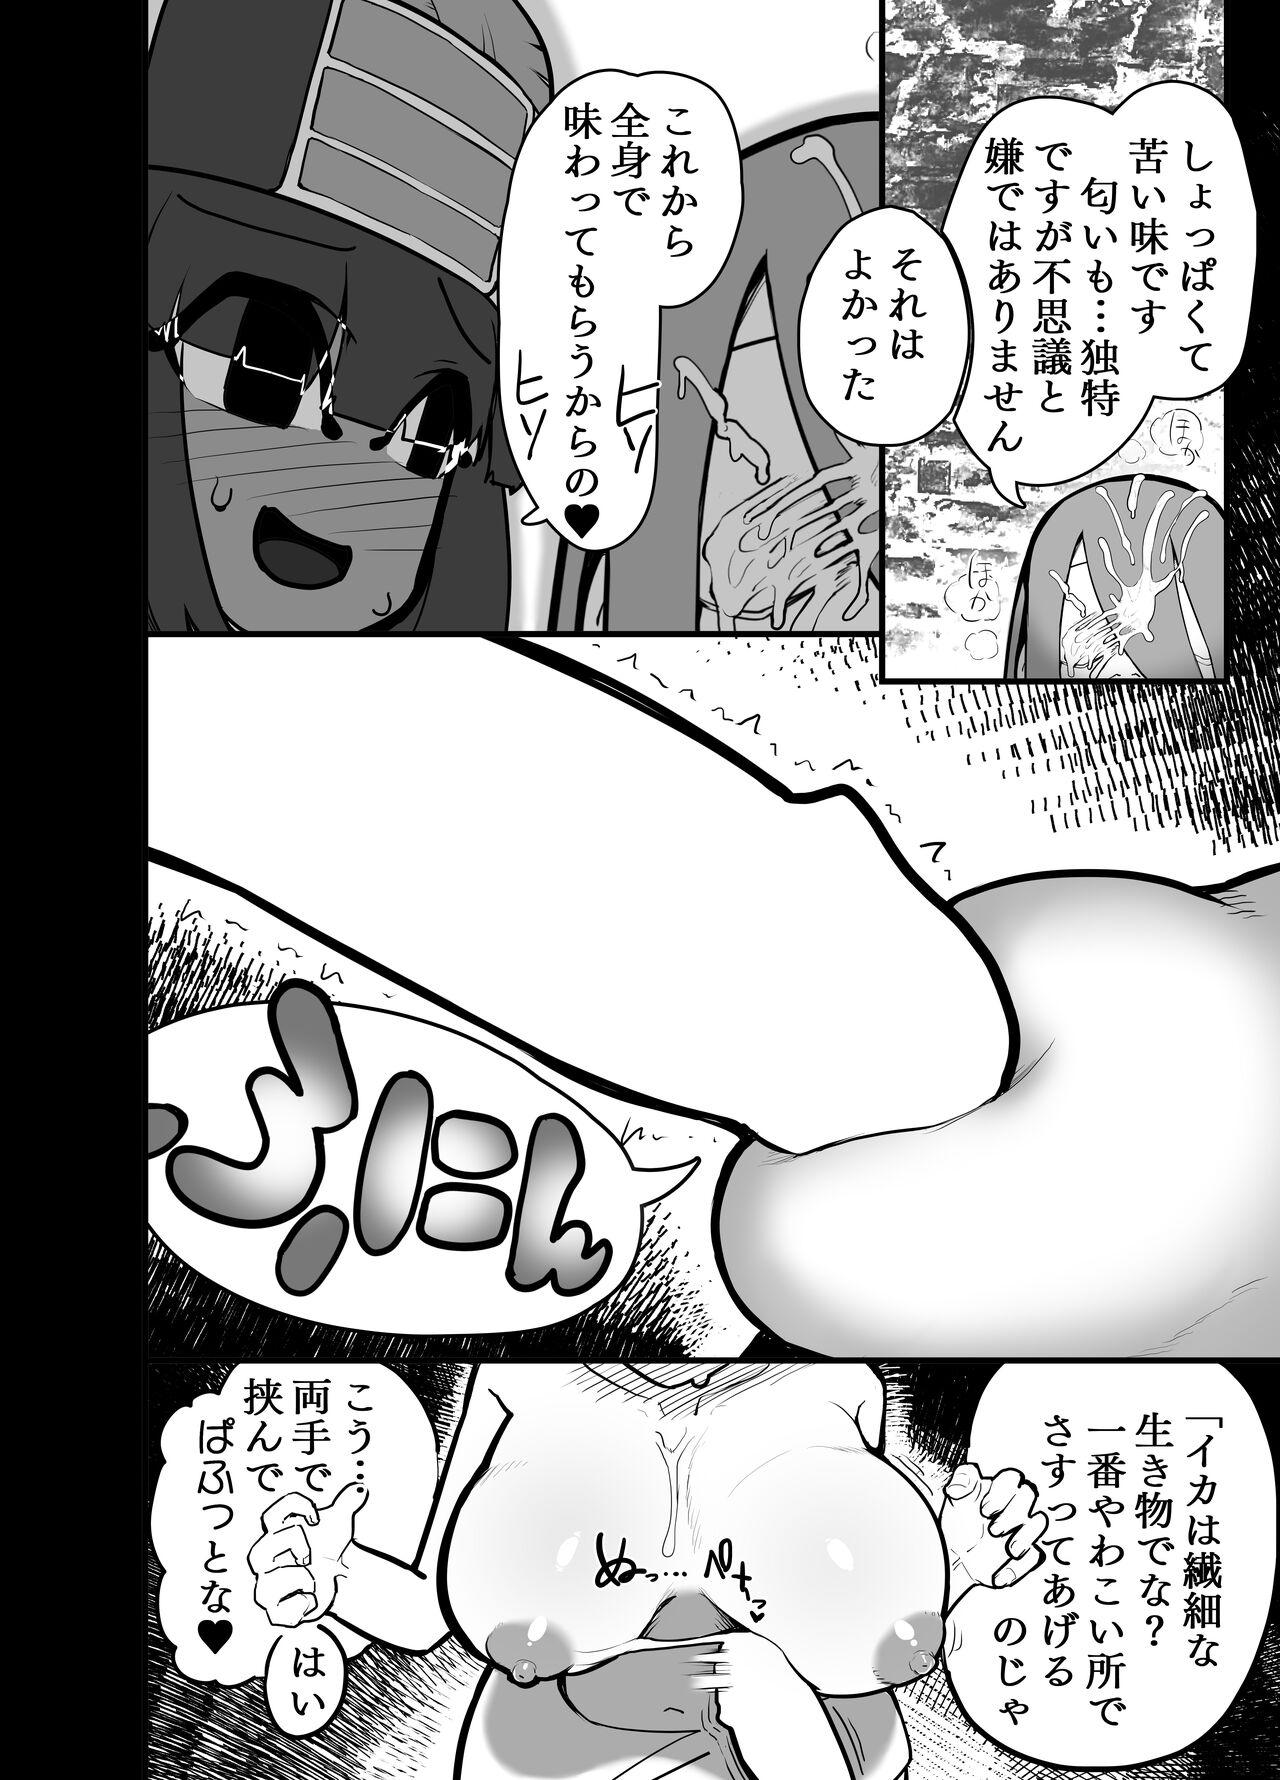 Roundass Shaseishin Min to SEMEN Bukkake Houjou no Gi - Original Japanese - Page 7